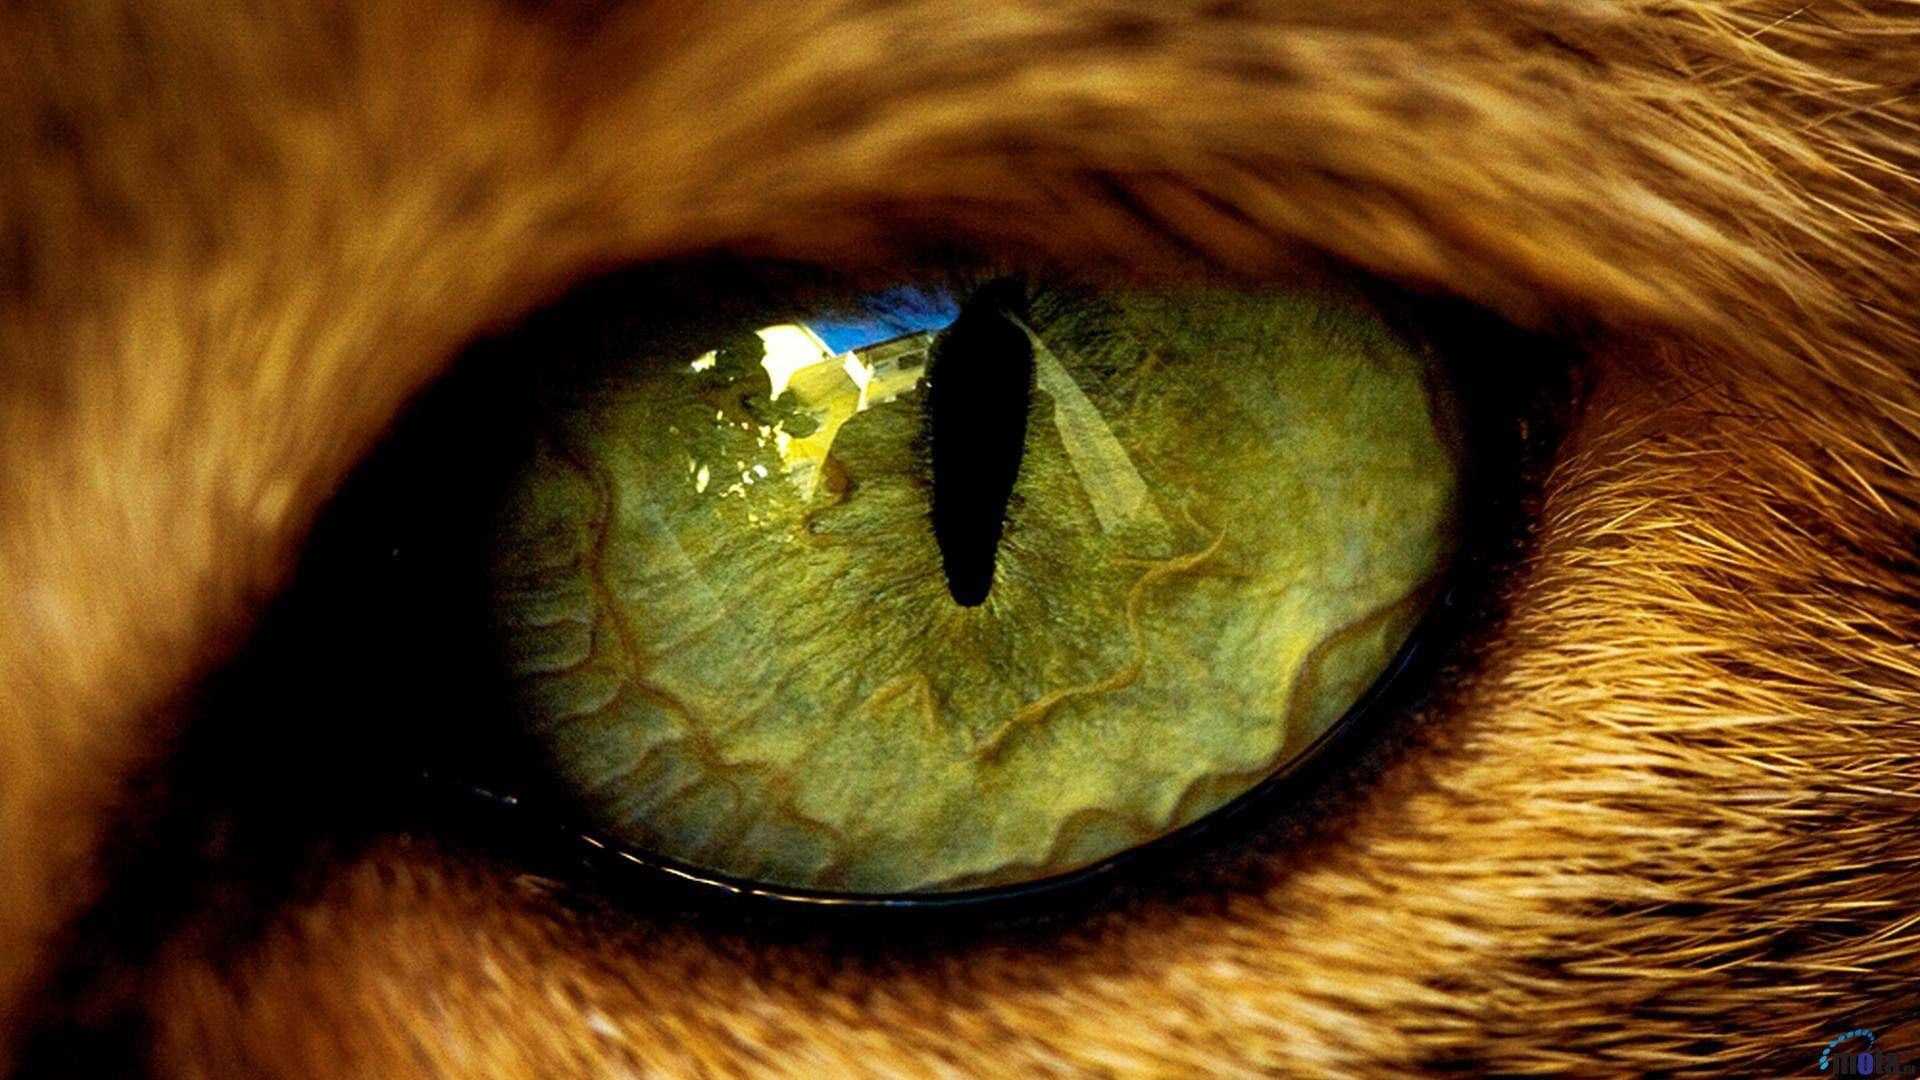 Cat eye photo